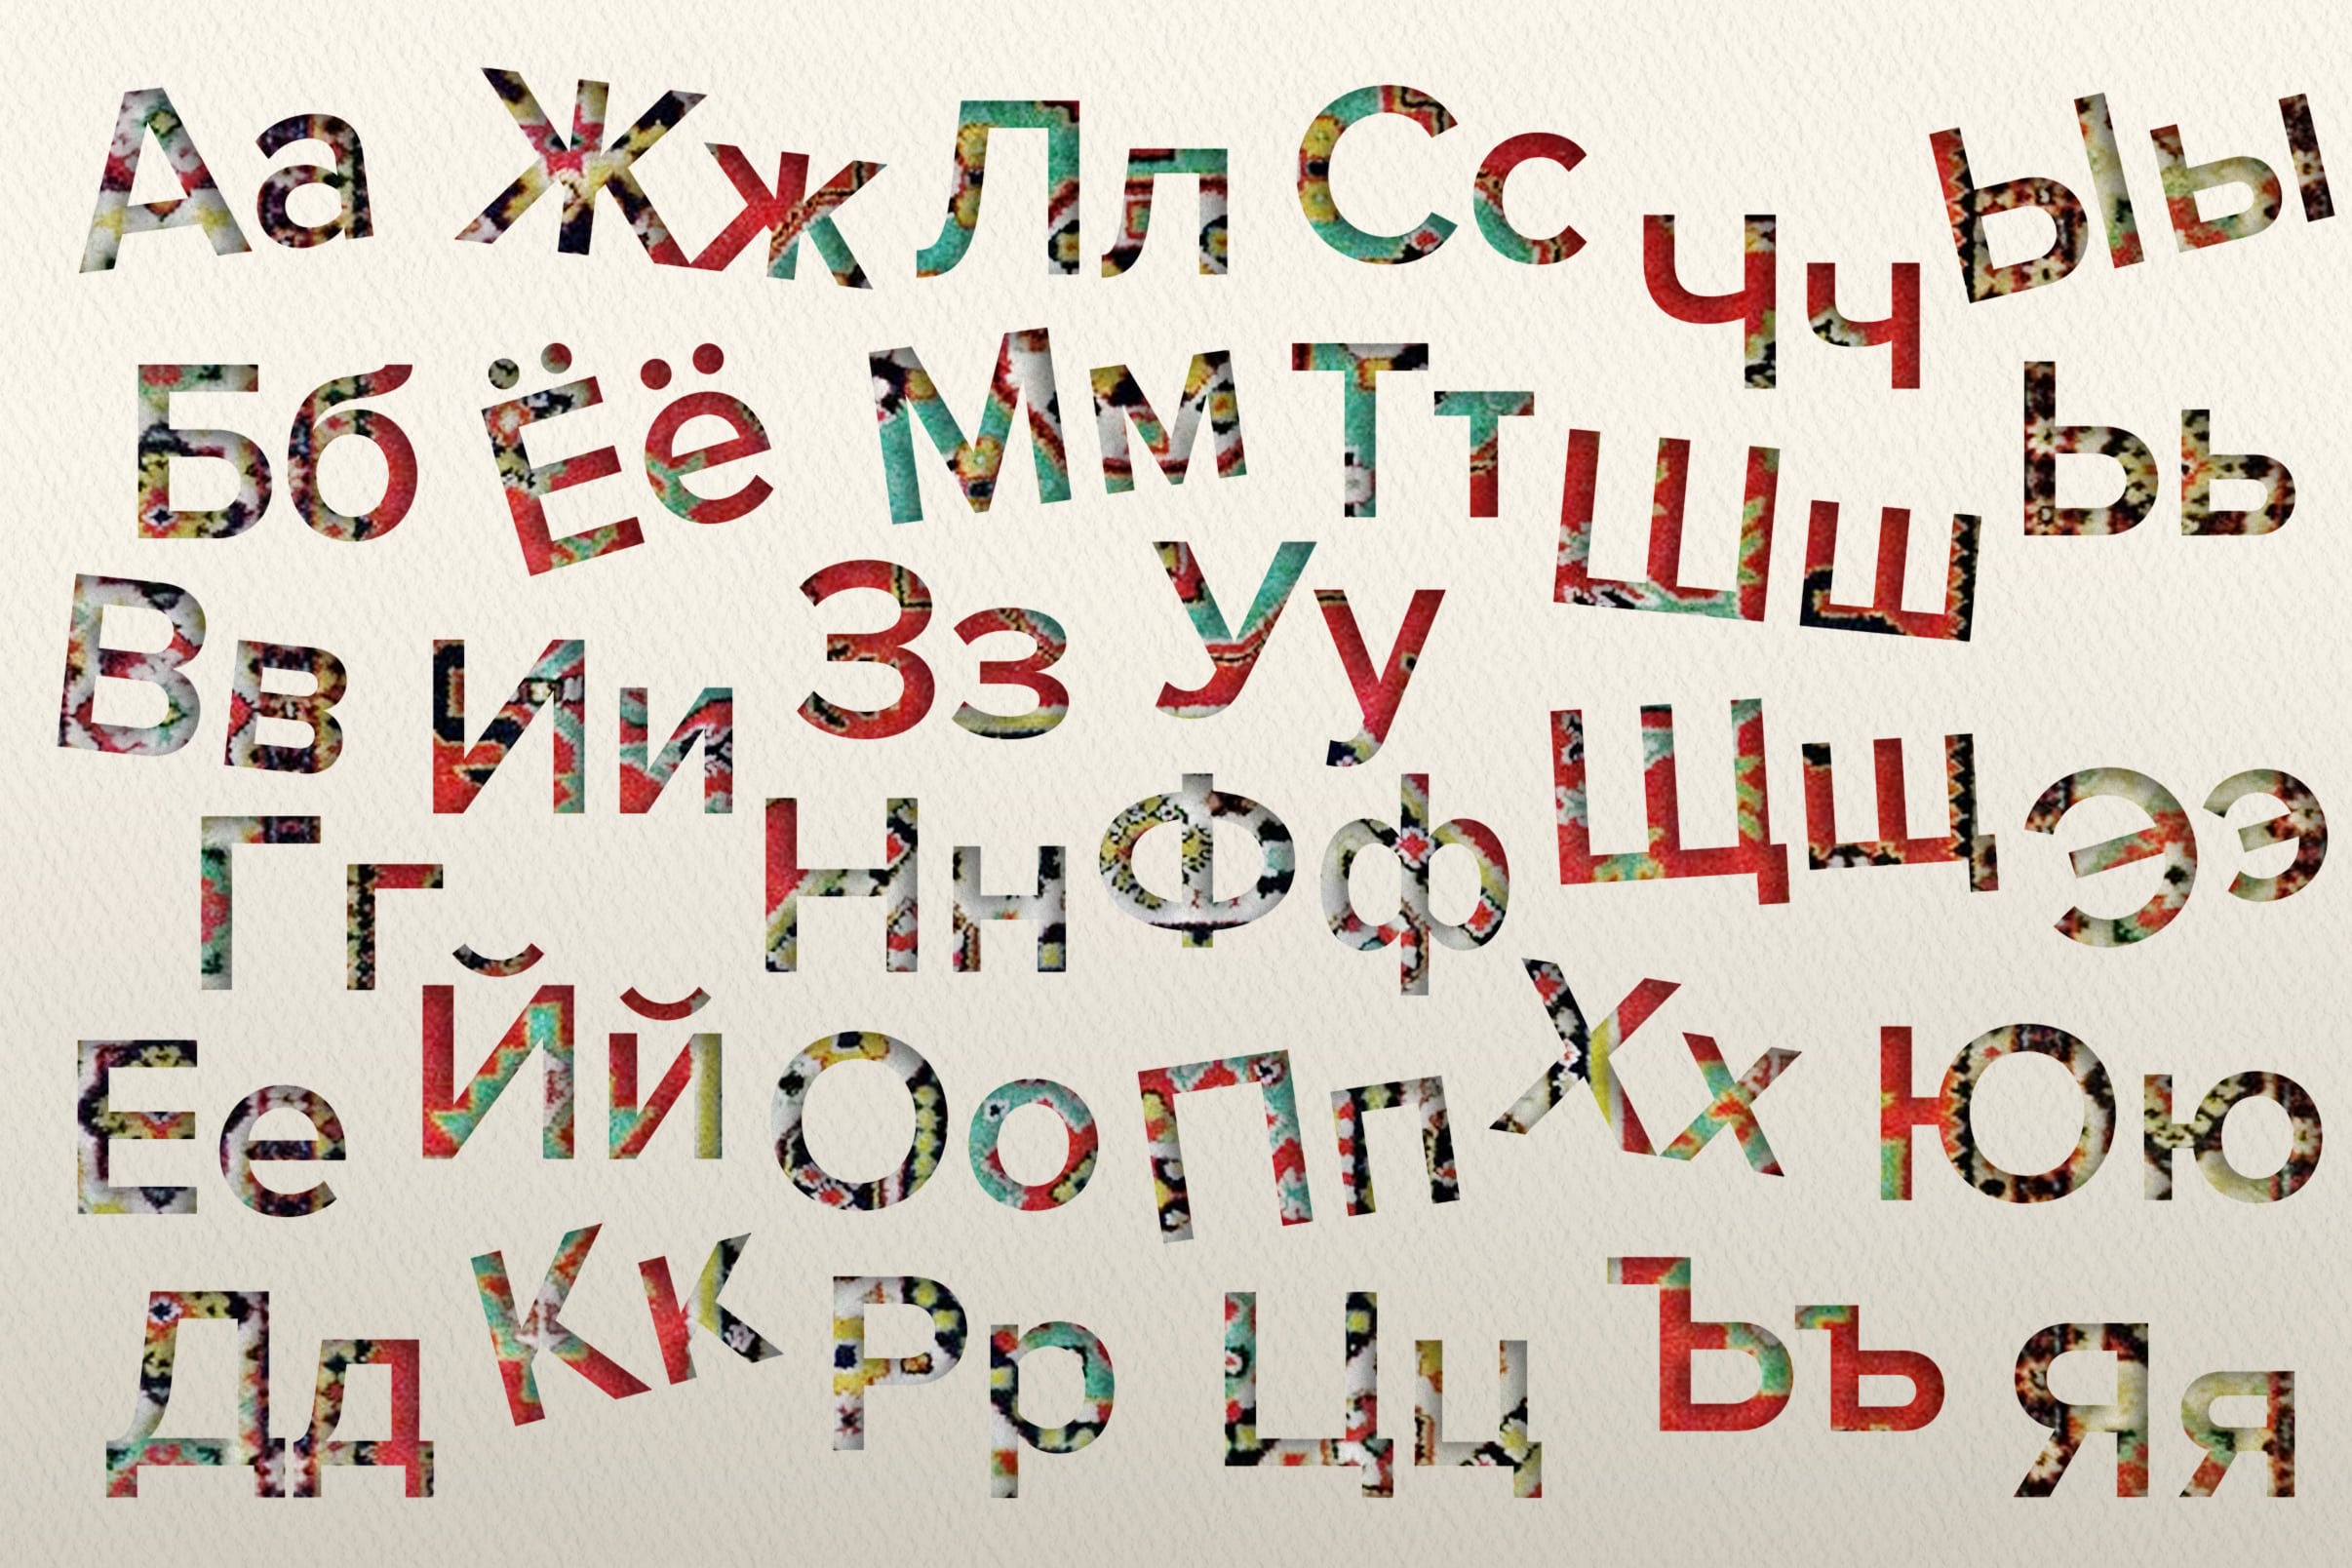 Russian Alphabet Lore Restarted: Б 